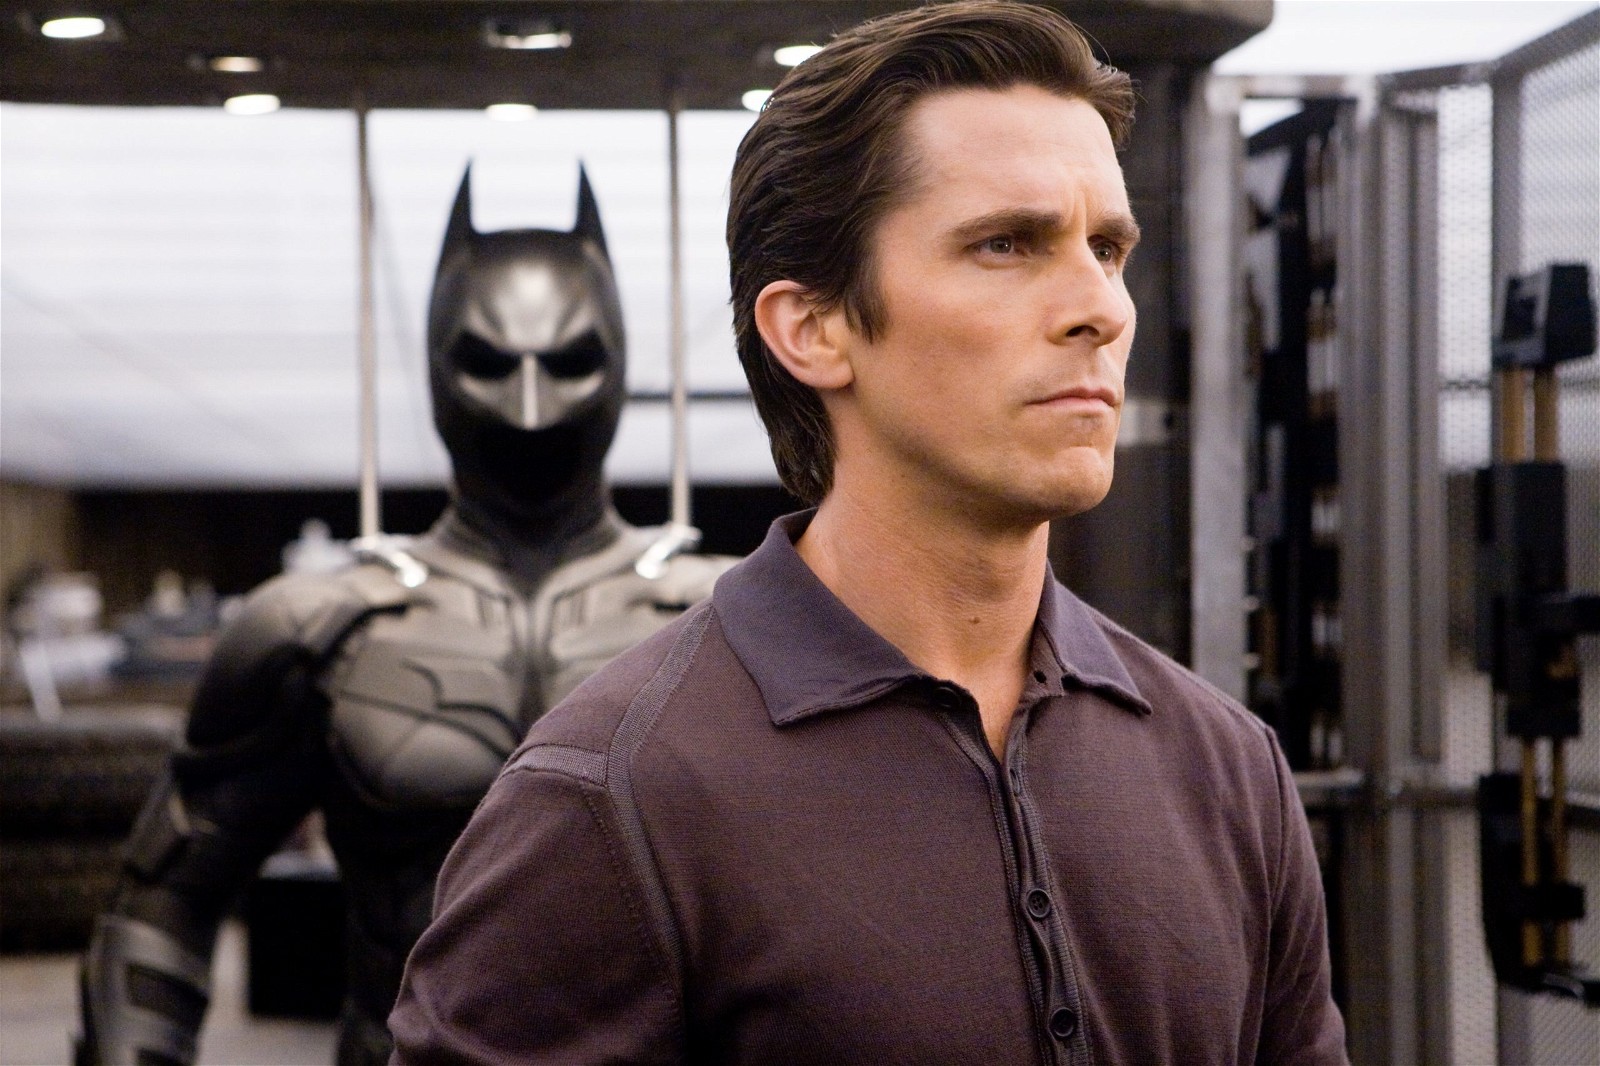 Christian Bale as Batman in Nolan's The Dark Knight trilogy.